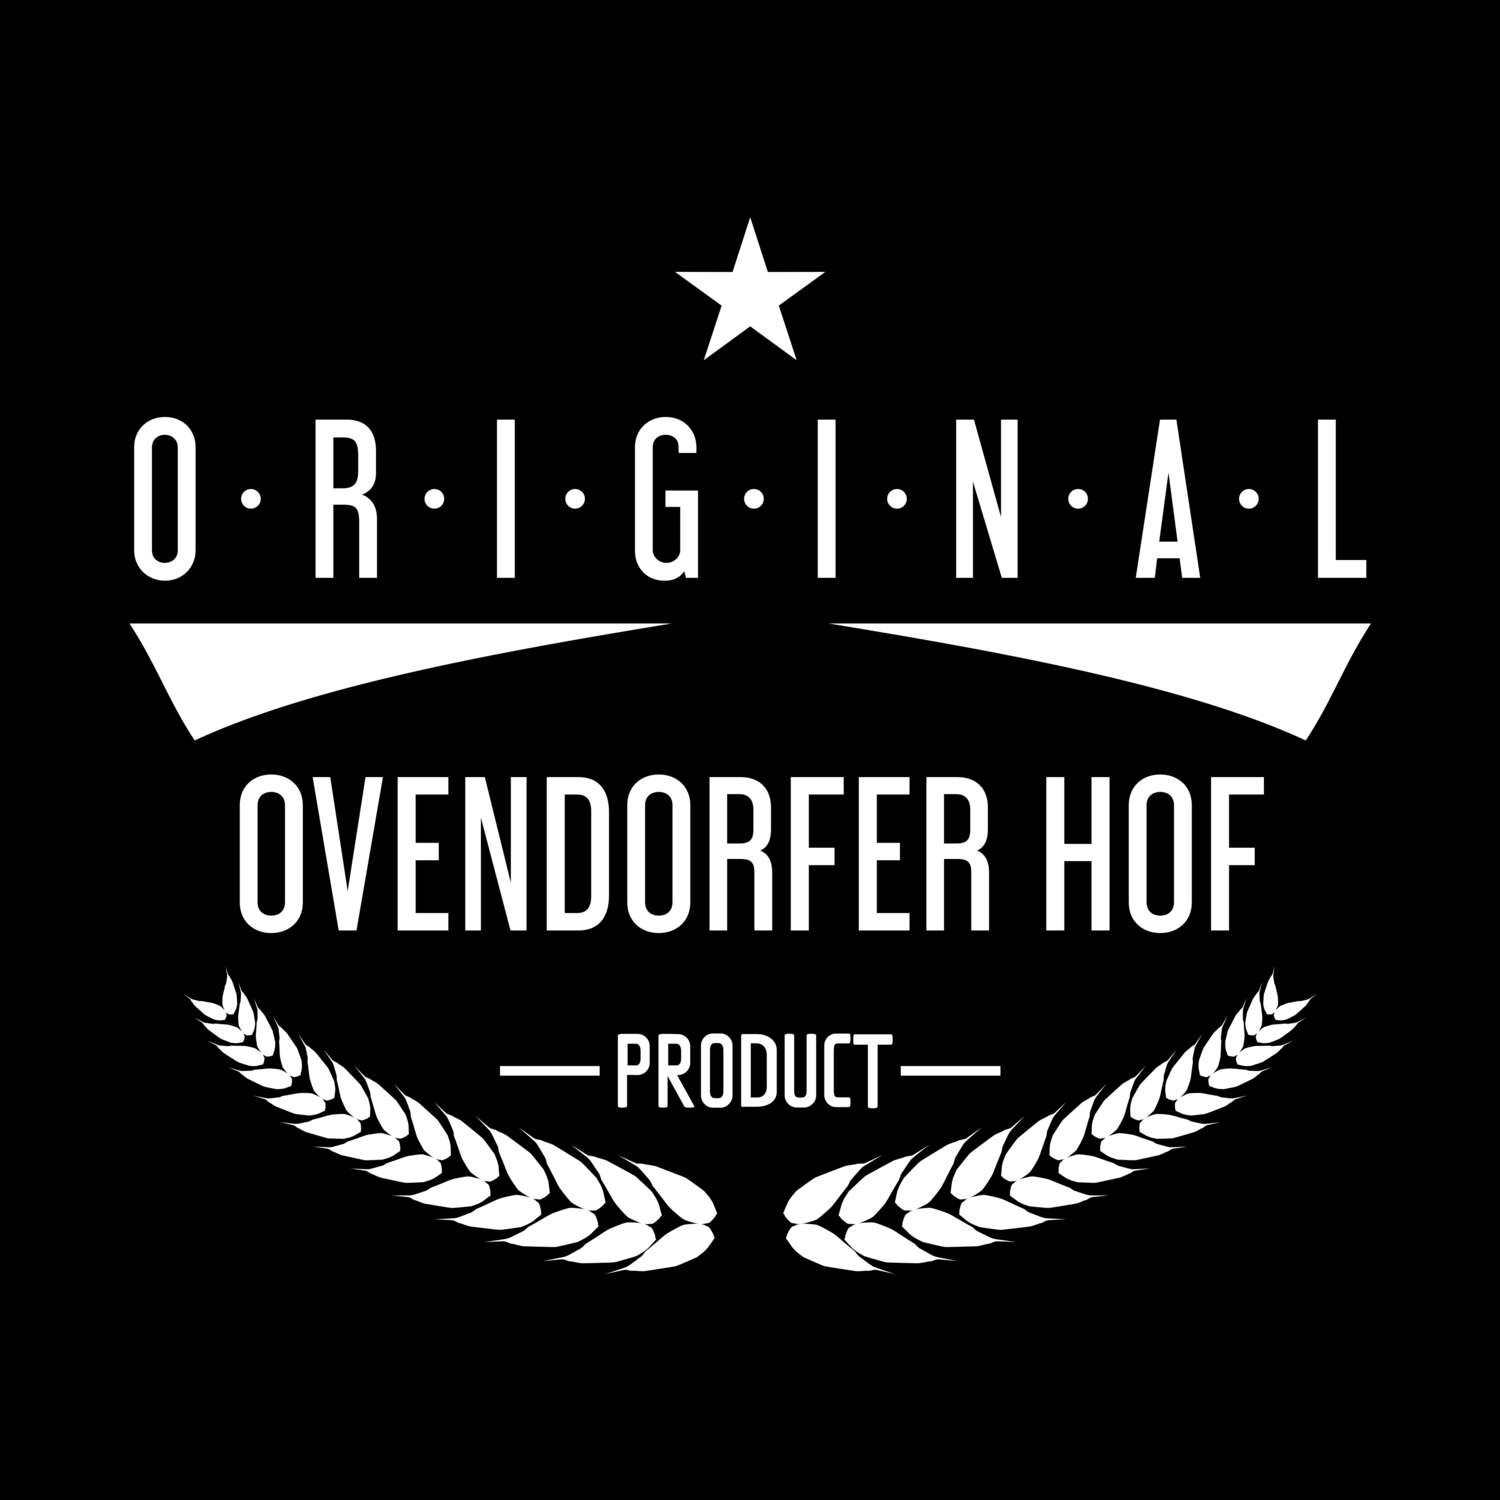 Ovendorfer Hof T-Shirt »Original Product«